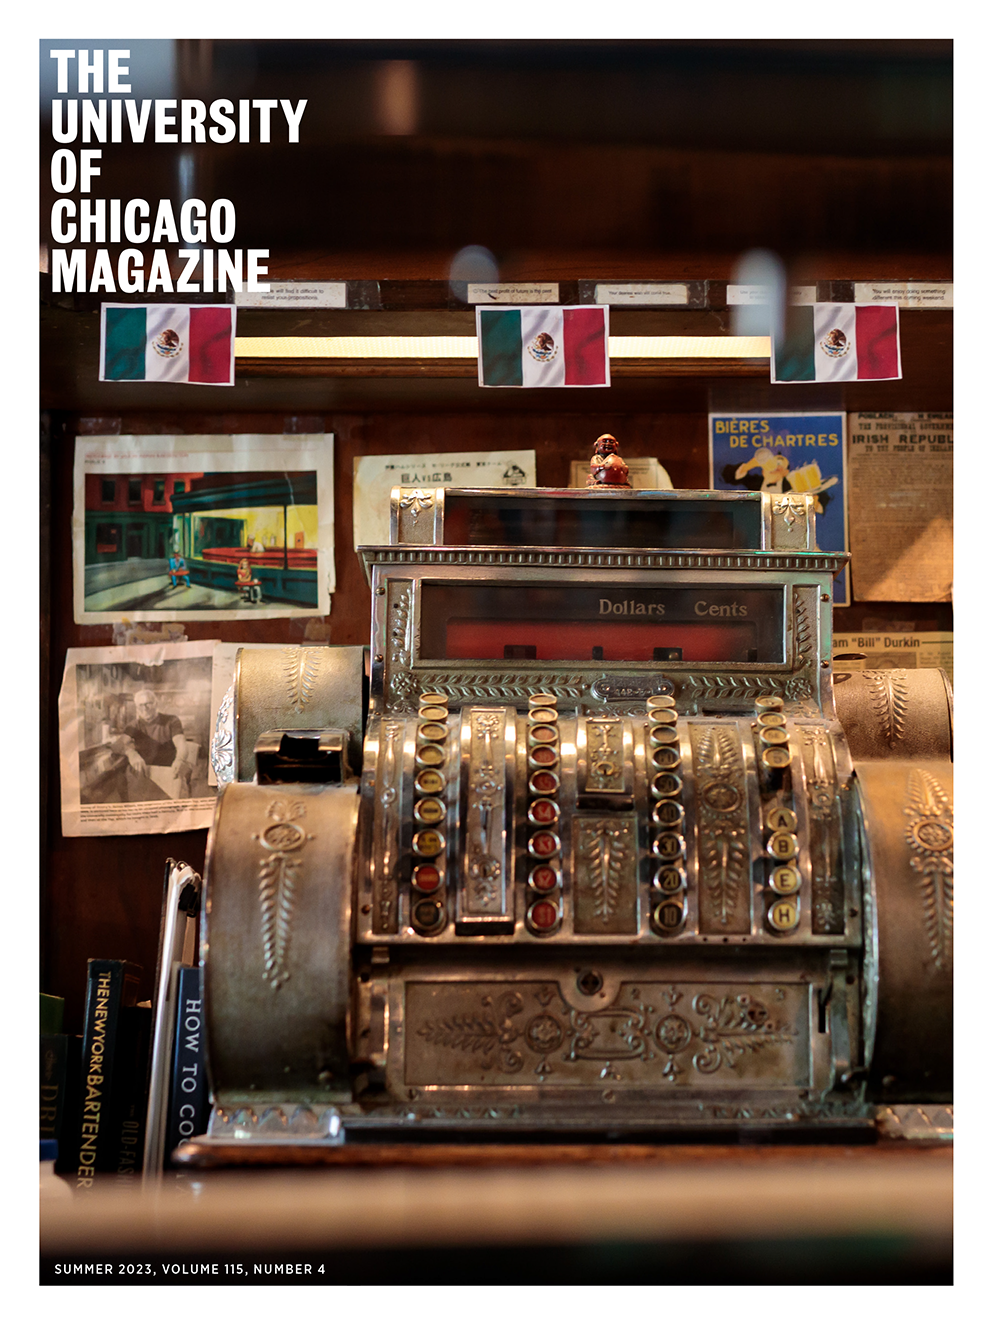 The University of Chicago Magazine